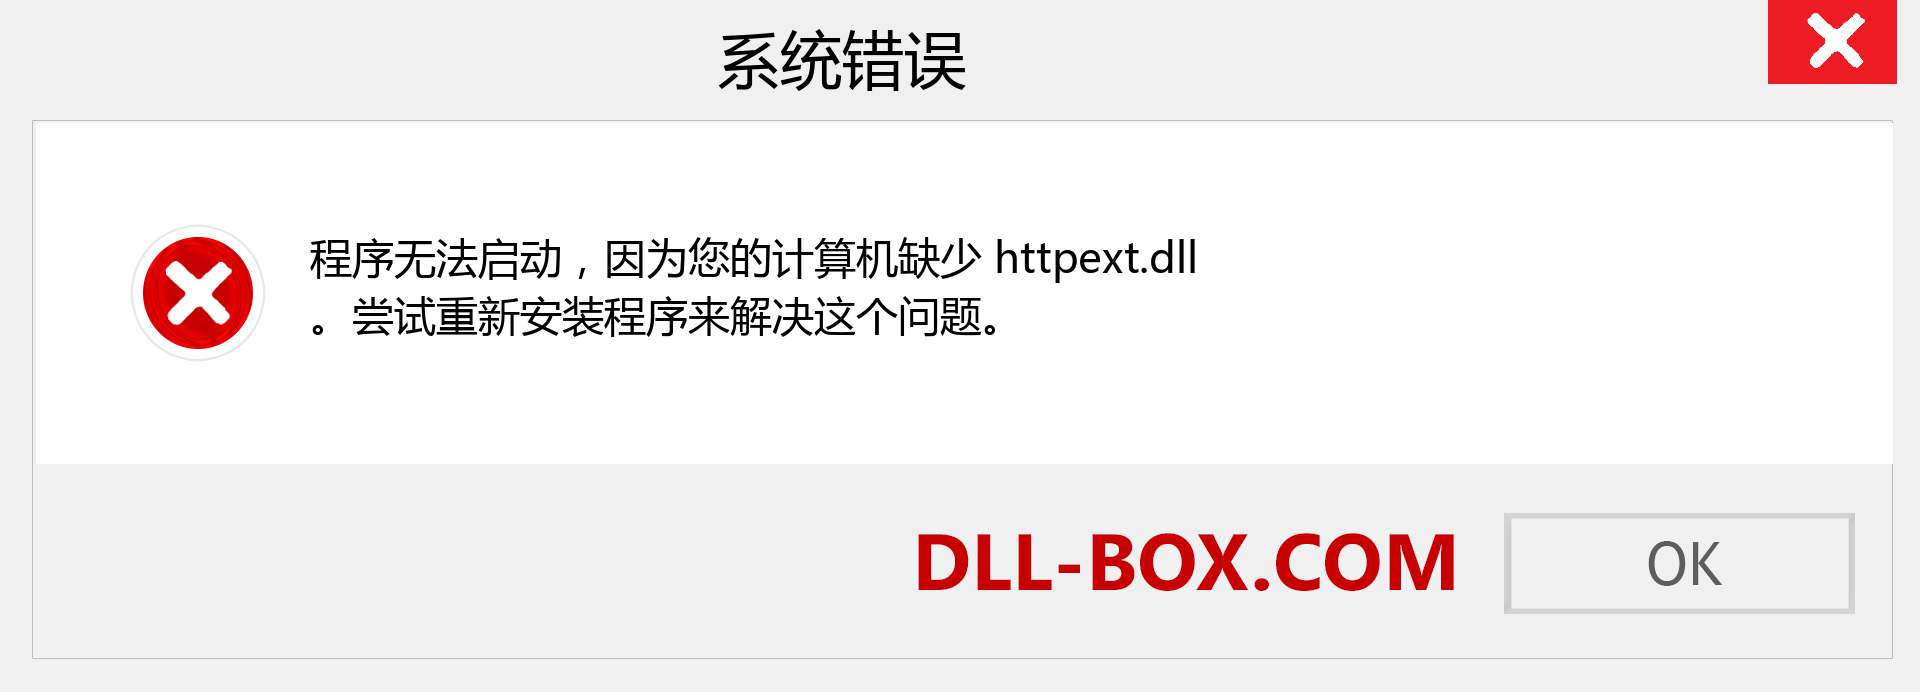 httpext.dll 文件丢失？。 适用于 Windows 7、8、10 的下载 - 修复 Windows、照片、图像上的 httpext dll 丢失错误